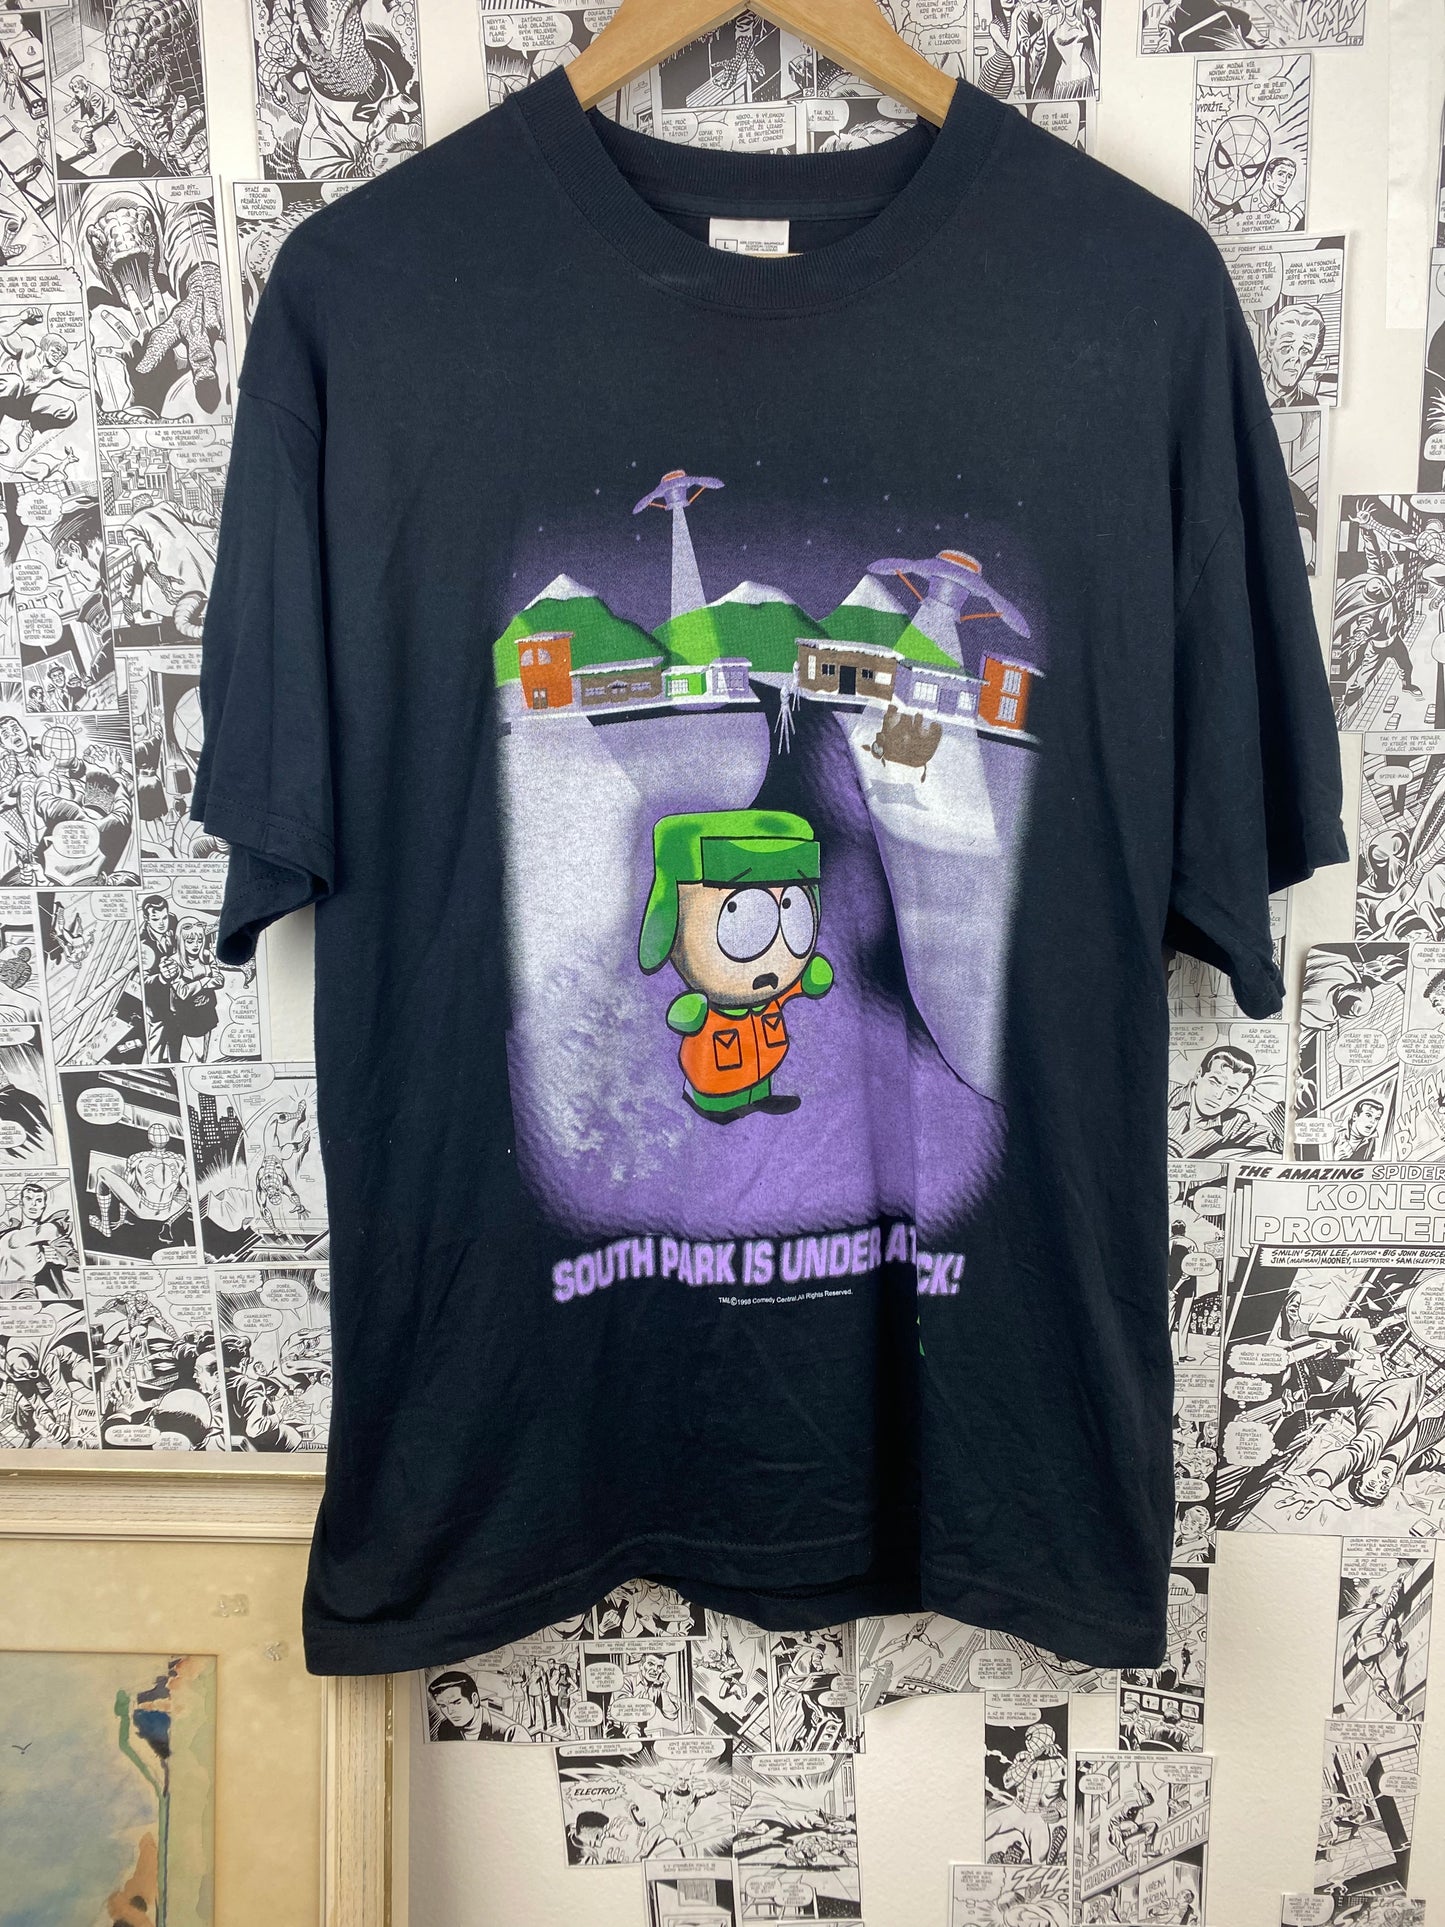 Vintage South Park “Under attack” 1998 t-shirt - size L